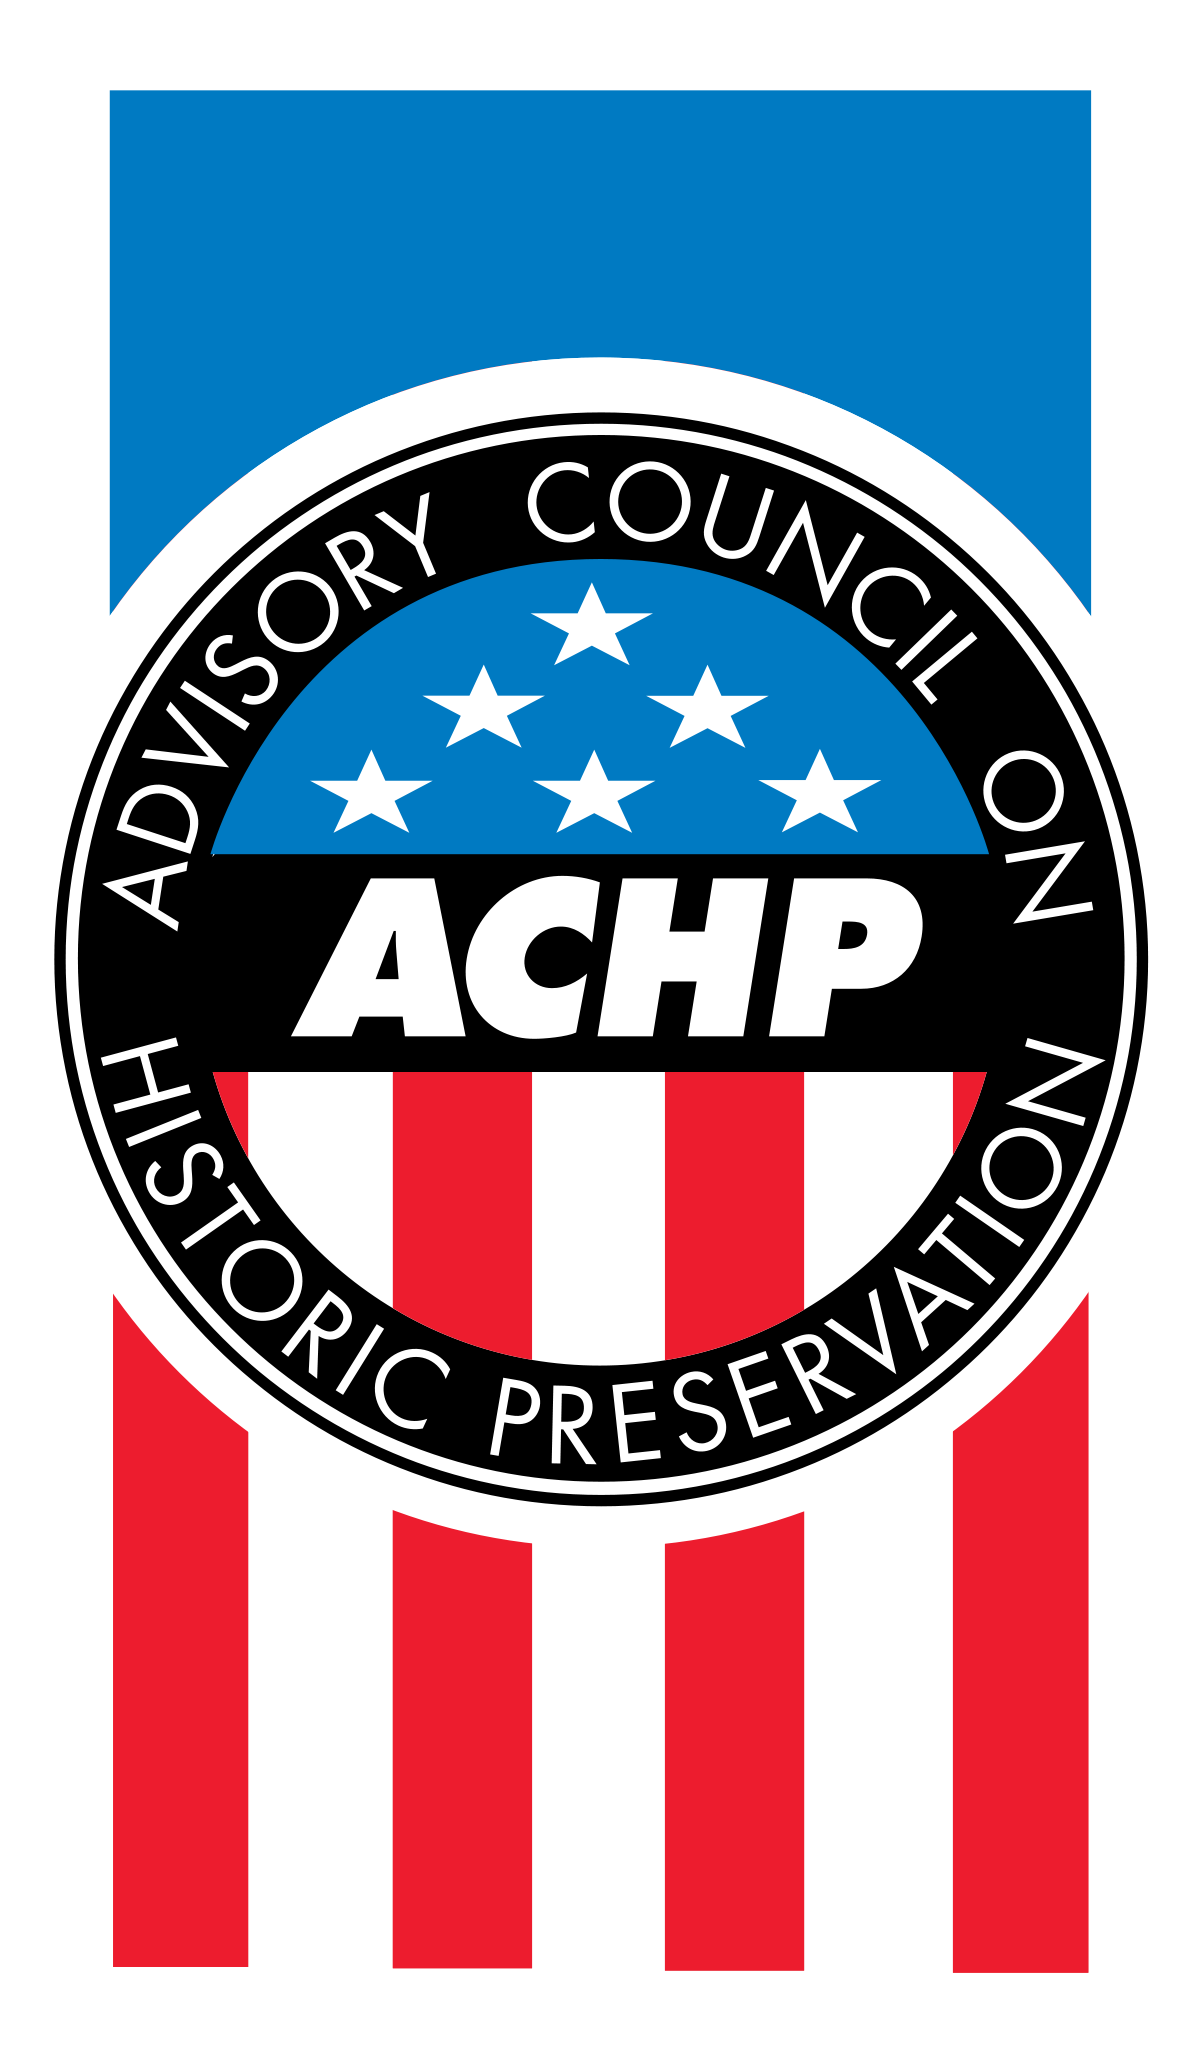 advisory council on historic preservation logo